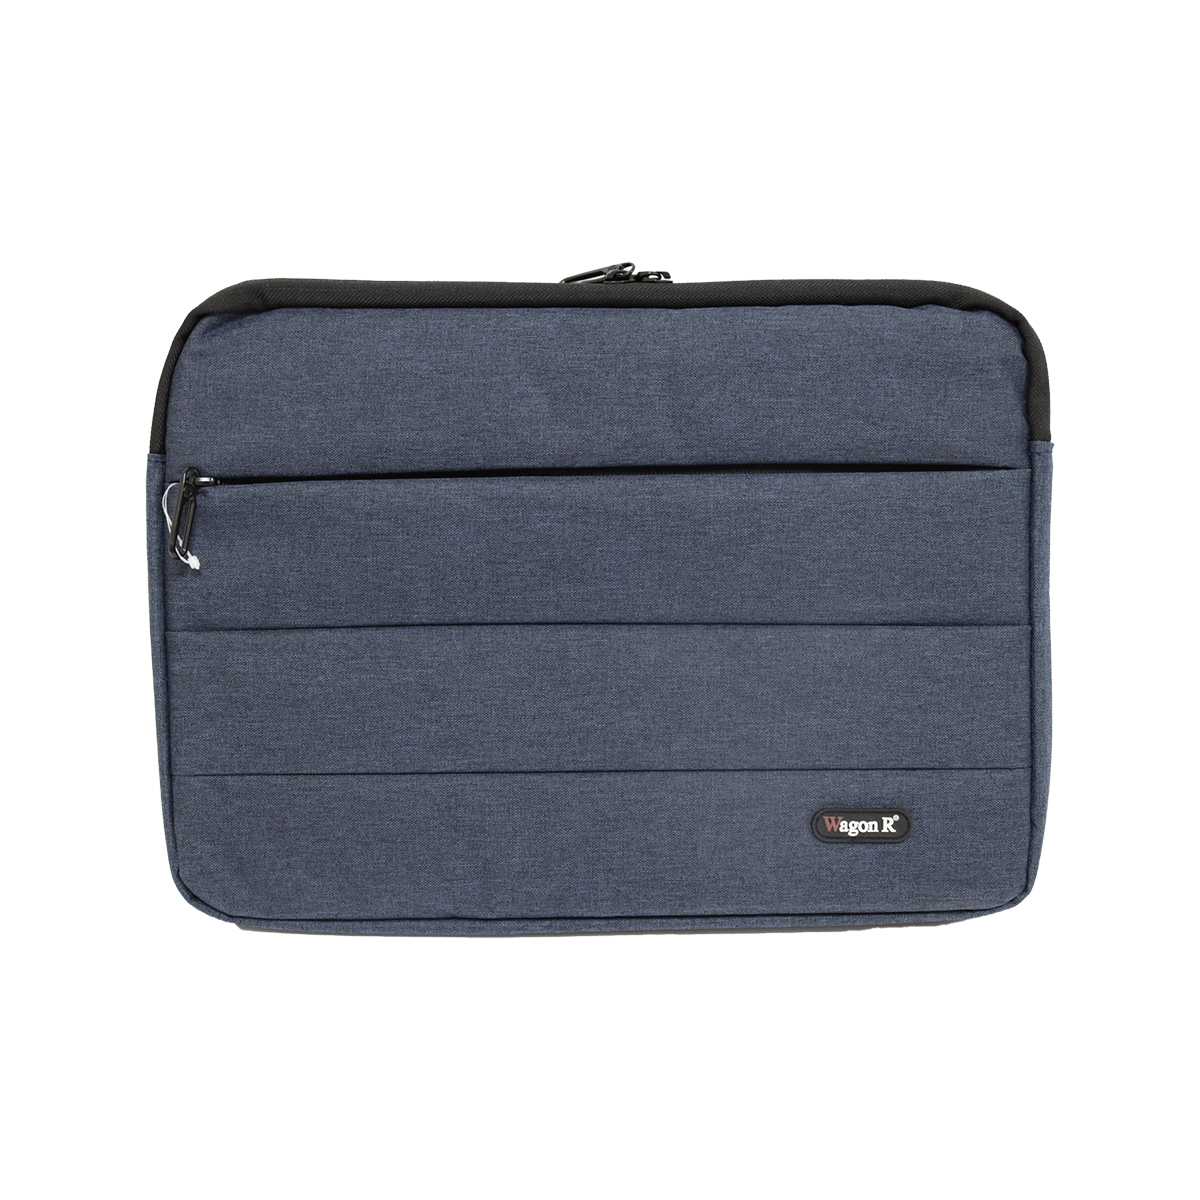 Wagon-R Laptop Bag 3030 13.3inch